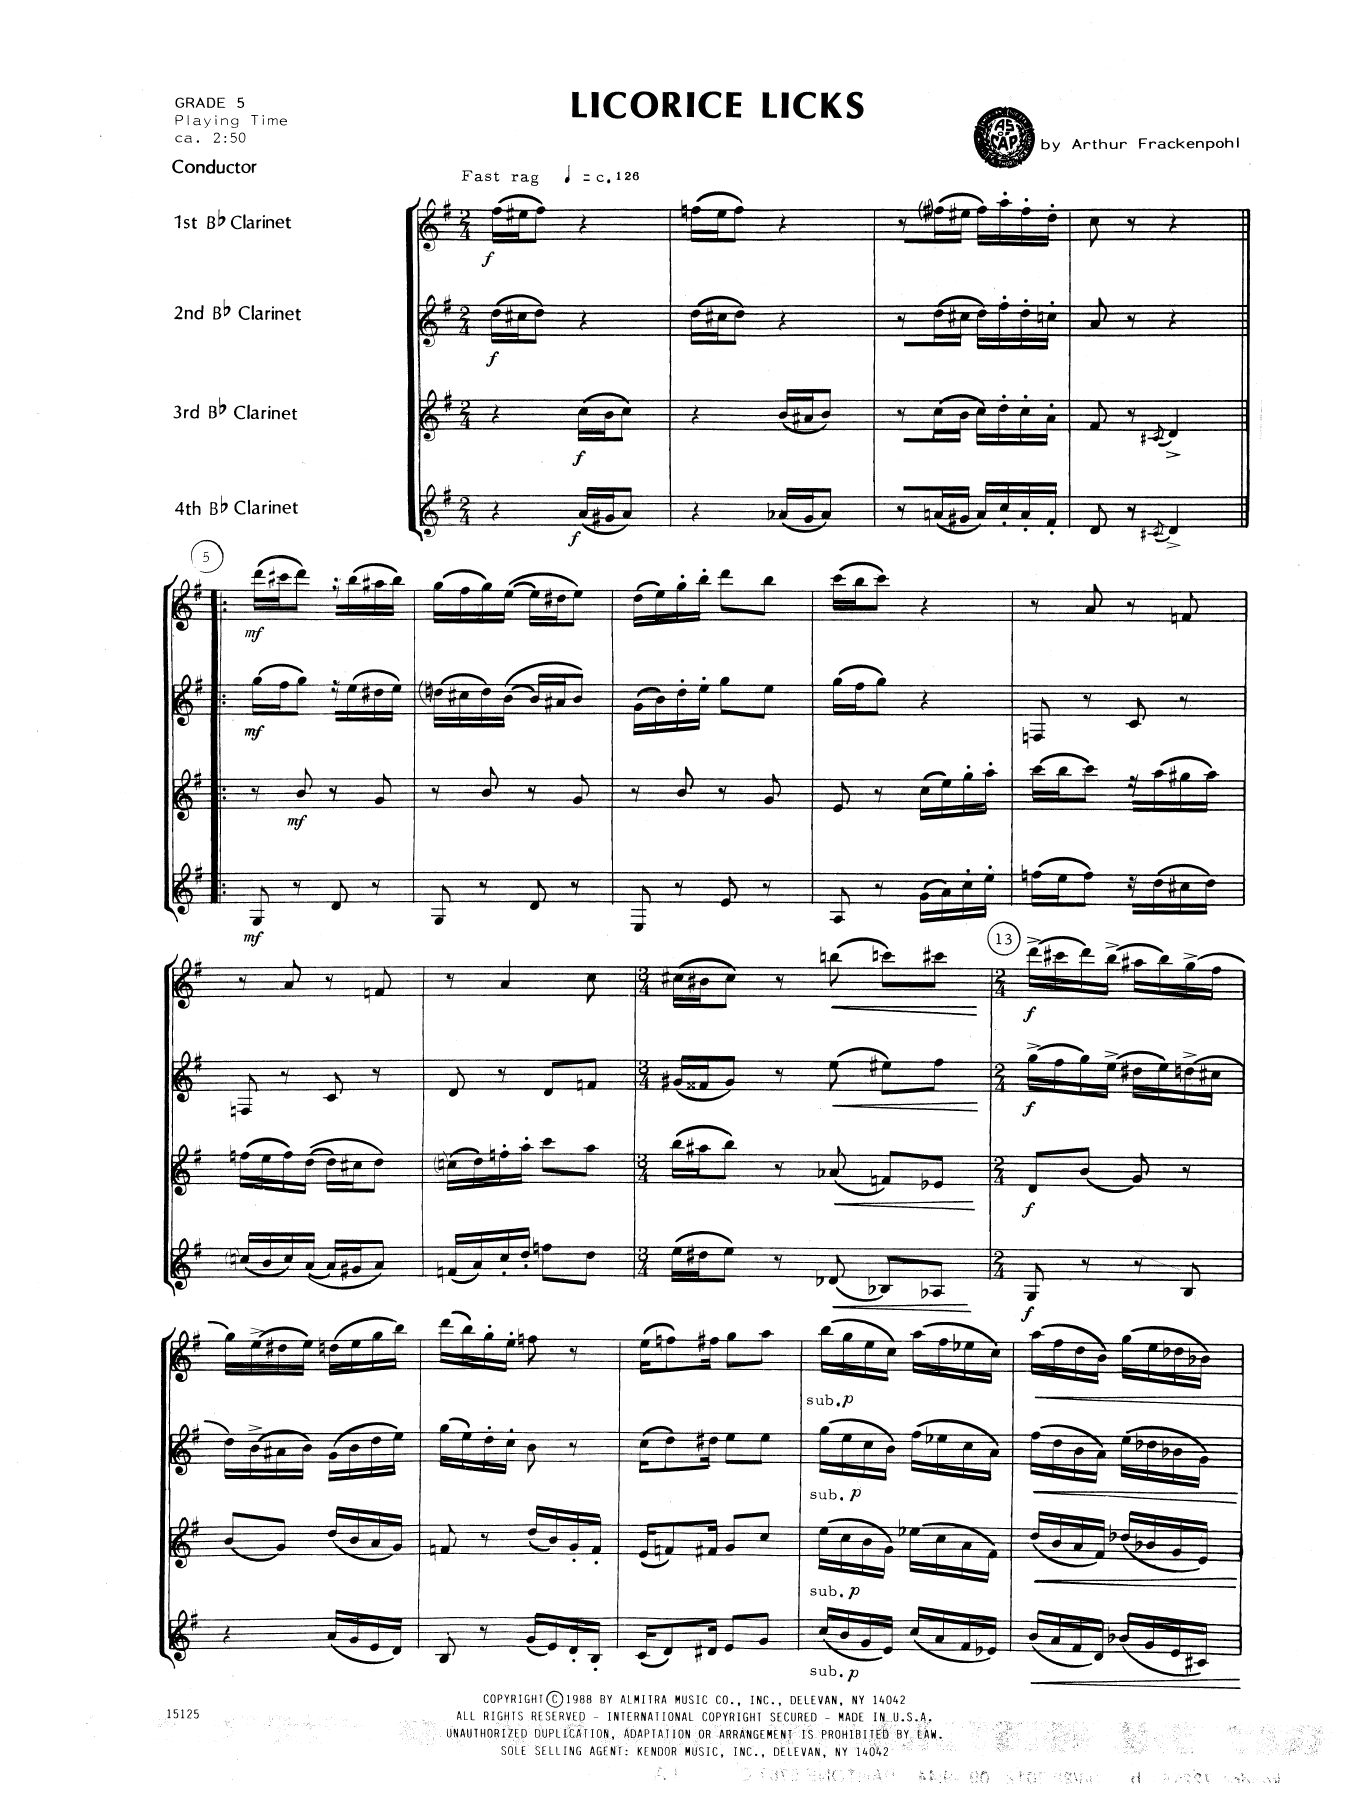 Arthur Frackenpohl Licorice Licks - Full Score sheet music notes and chords. Download Printable PDF.